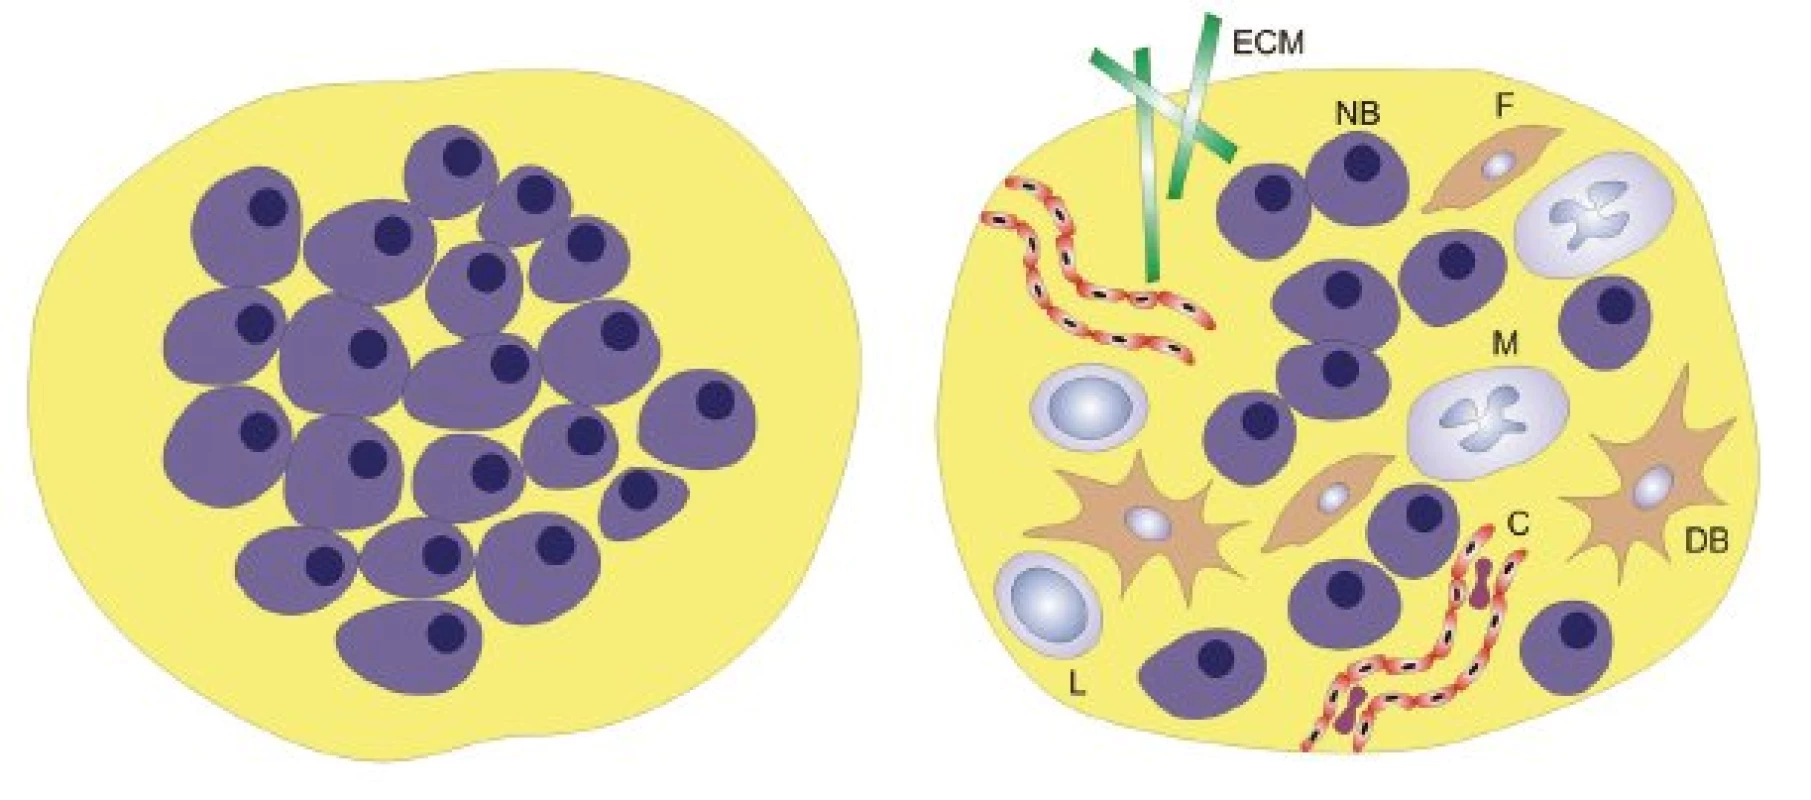 Redukcionistický a komplexní pohled na nádor. ECM – extracelulární matrix, F – fibroblast, M – makrofág, NB – nádorová buňka, DB – dendritická buňka, L – lymfocyt, C – céva.